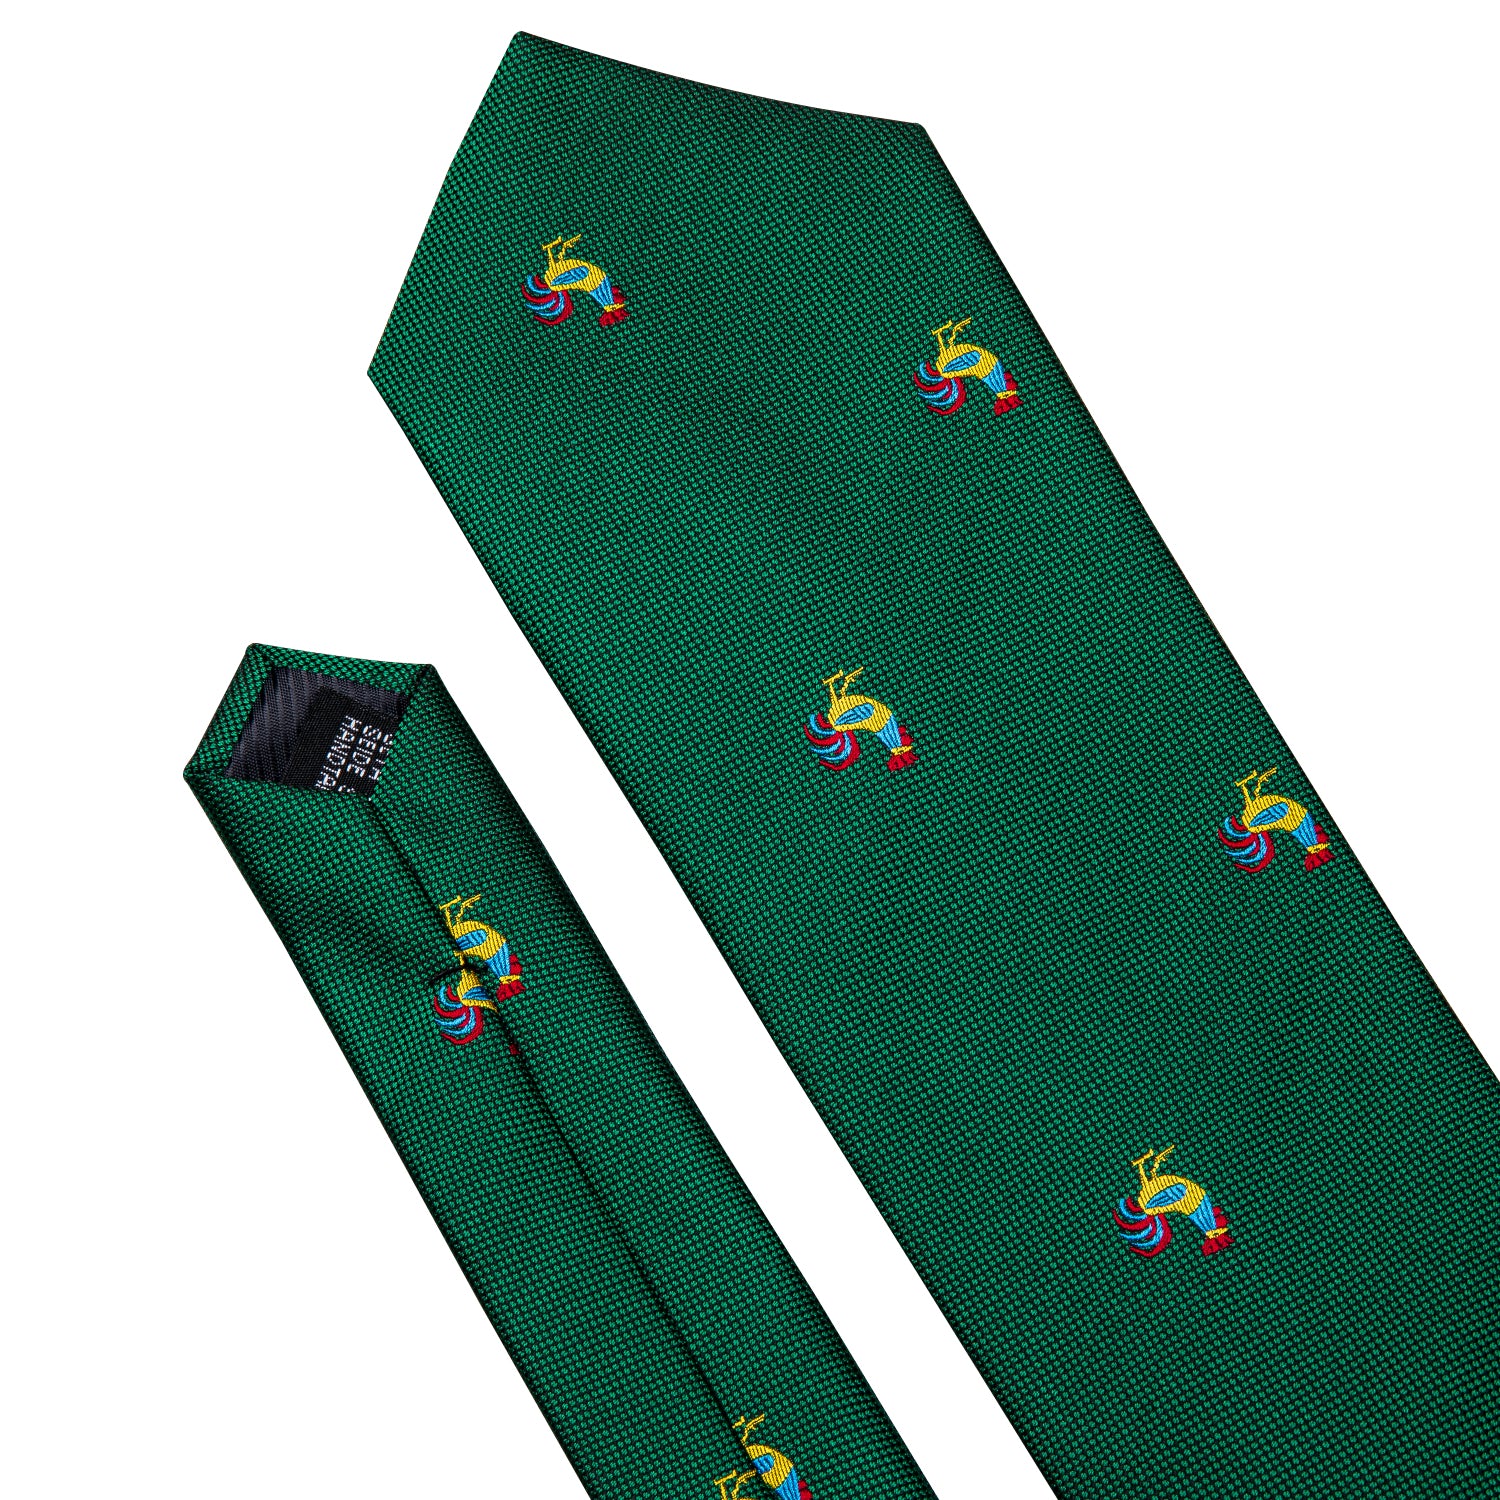 Green Tie Novelty Rooster Pattern Necktie Hanky Cufflinks Set